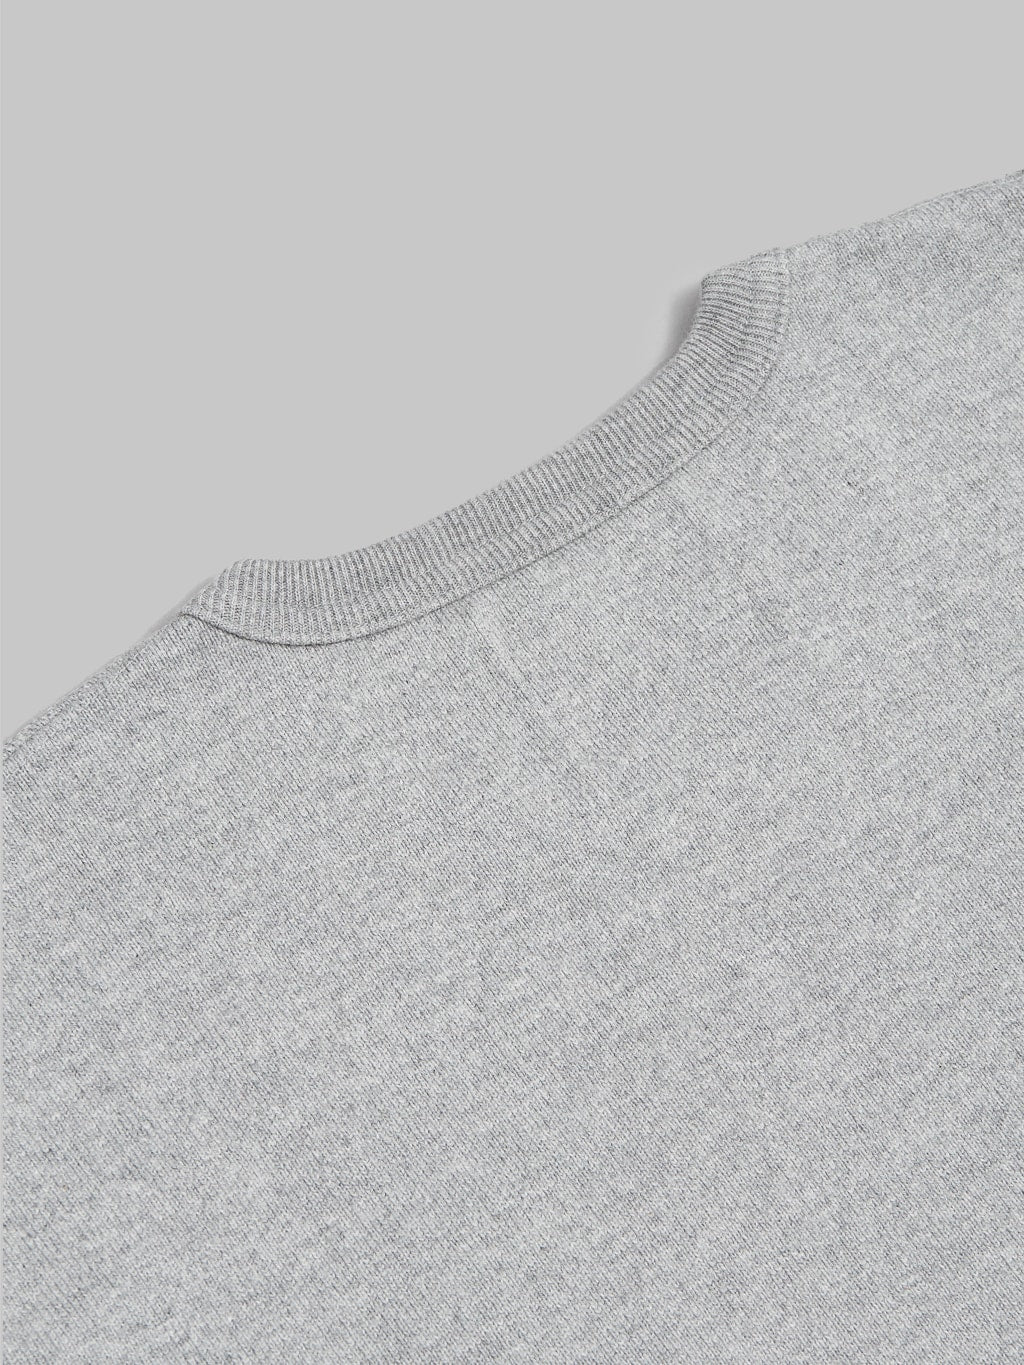 wonder looper crewneck Tshirt Double Heavyweight grey made in japan